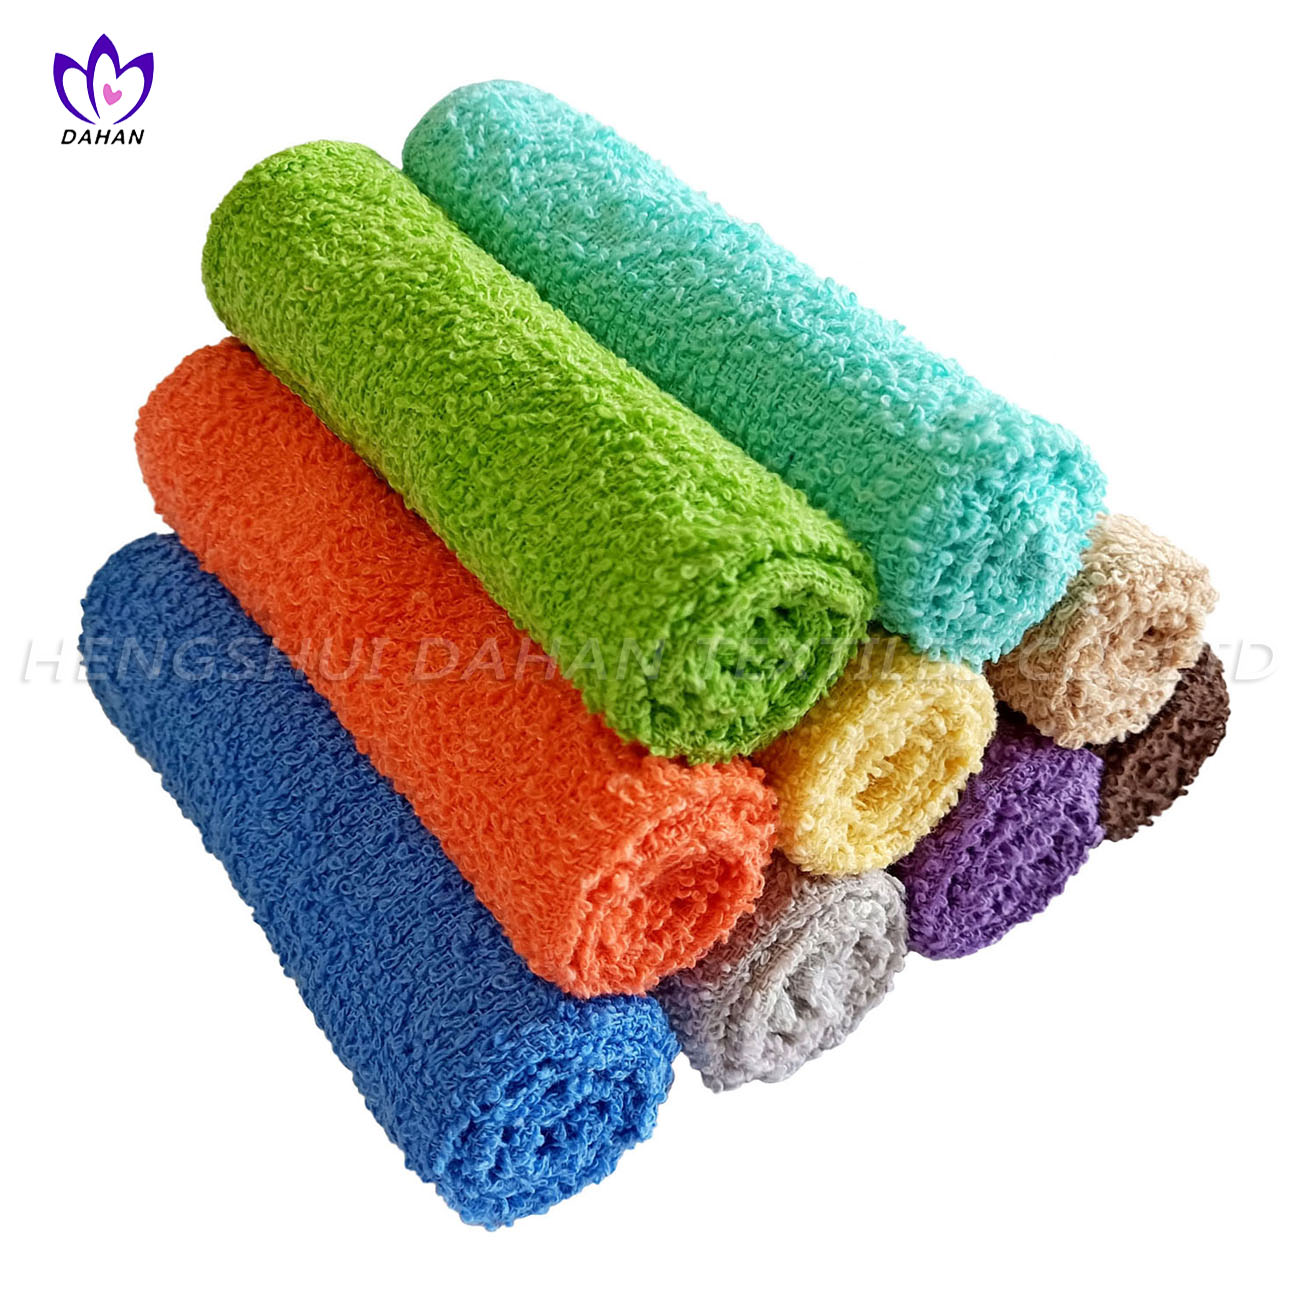 424BH 100%cotton solid color wash cloths, kitchen towel,3pack.